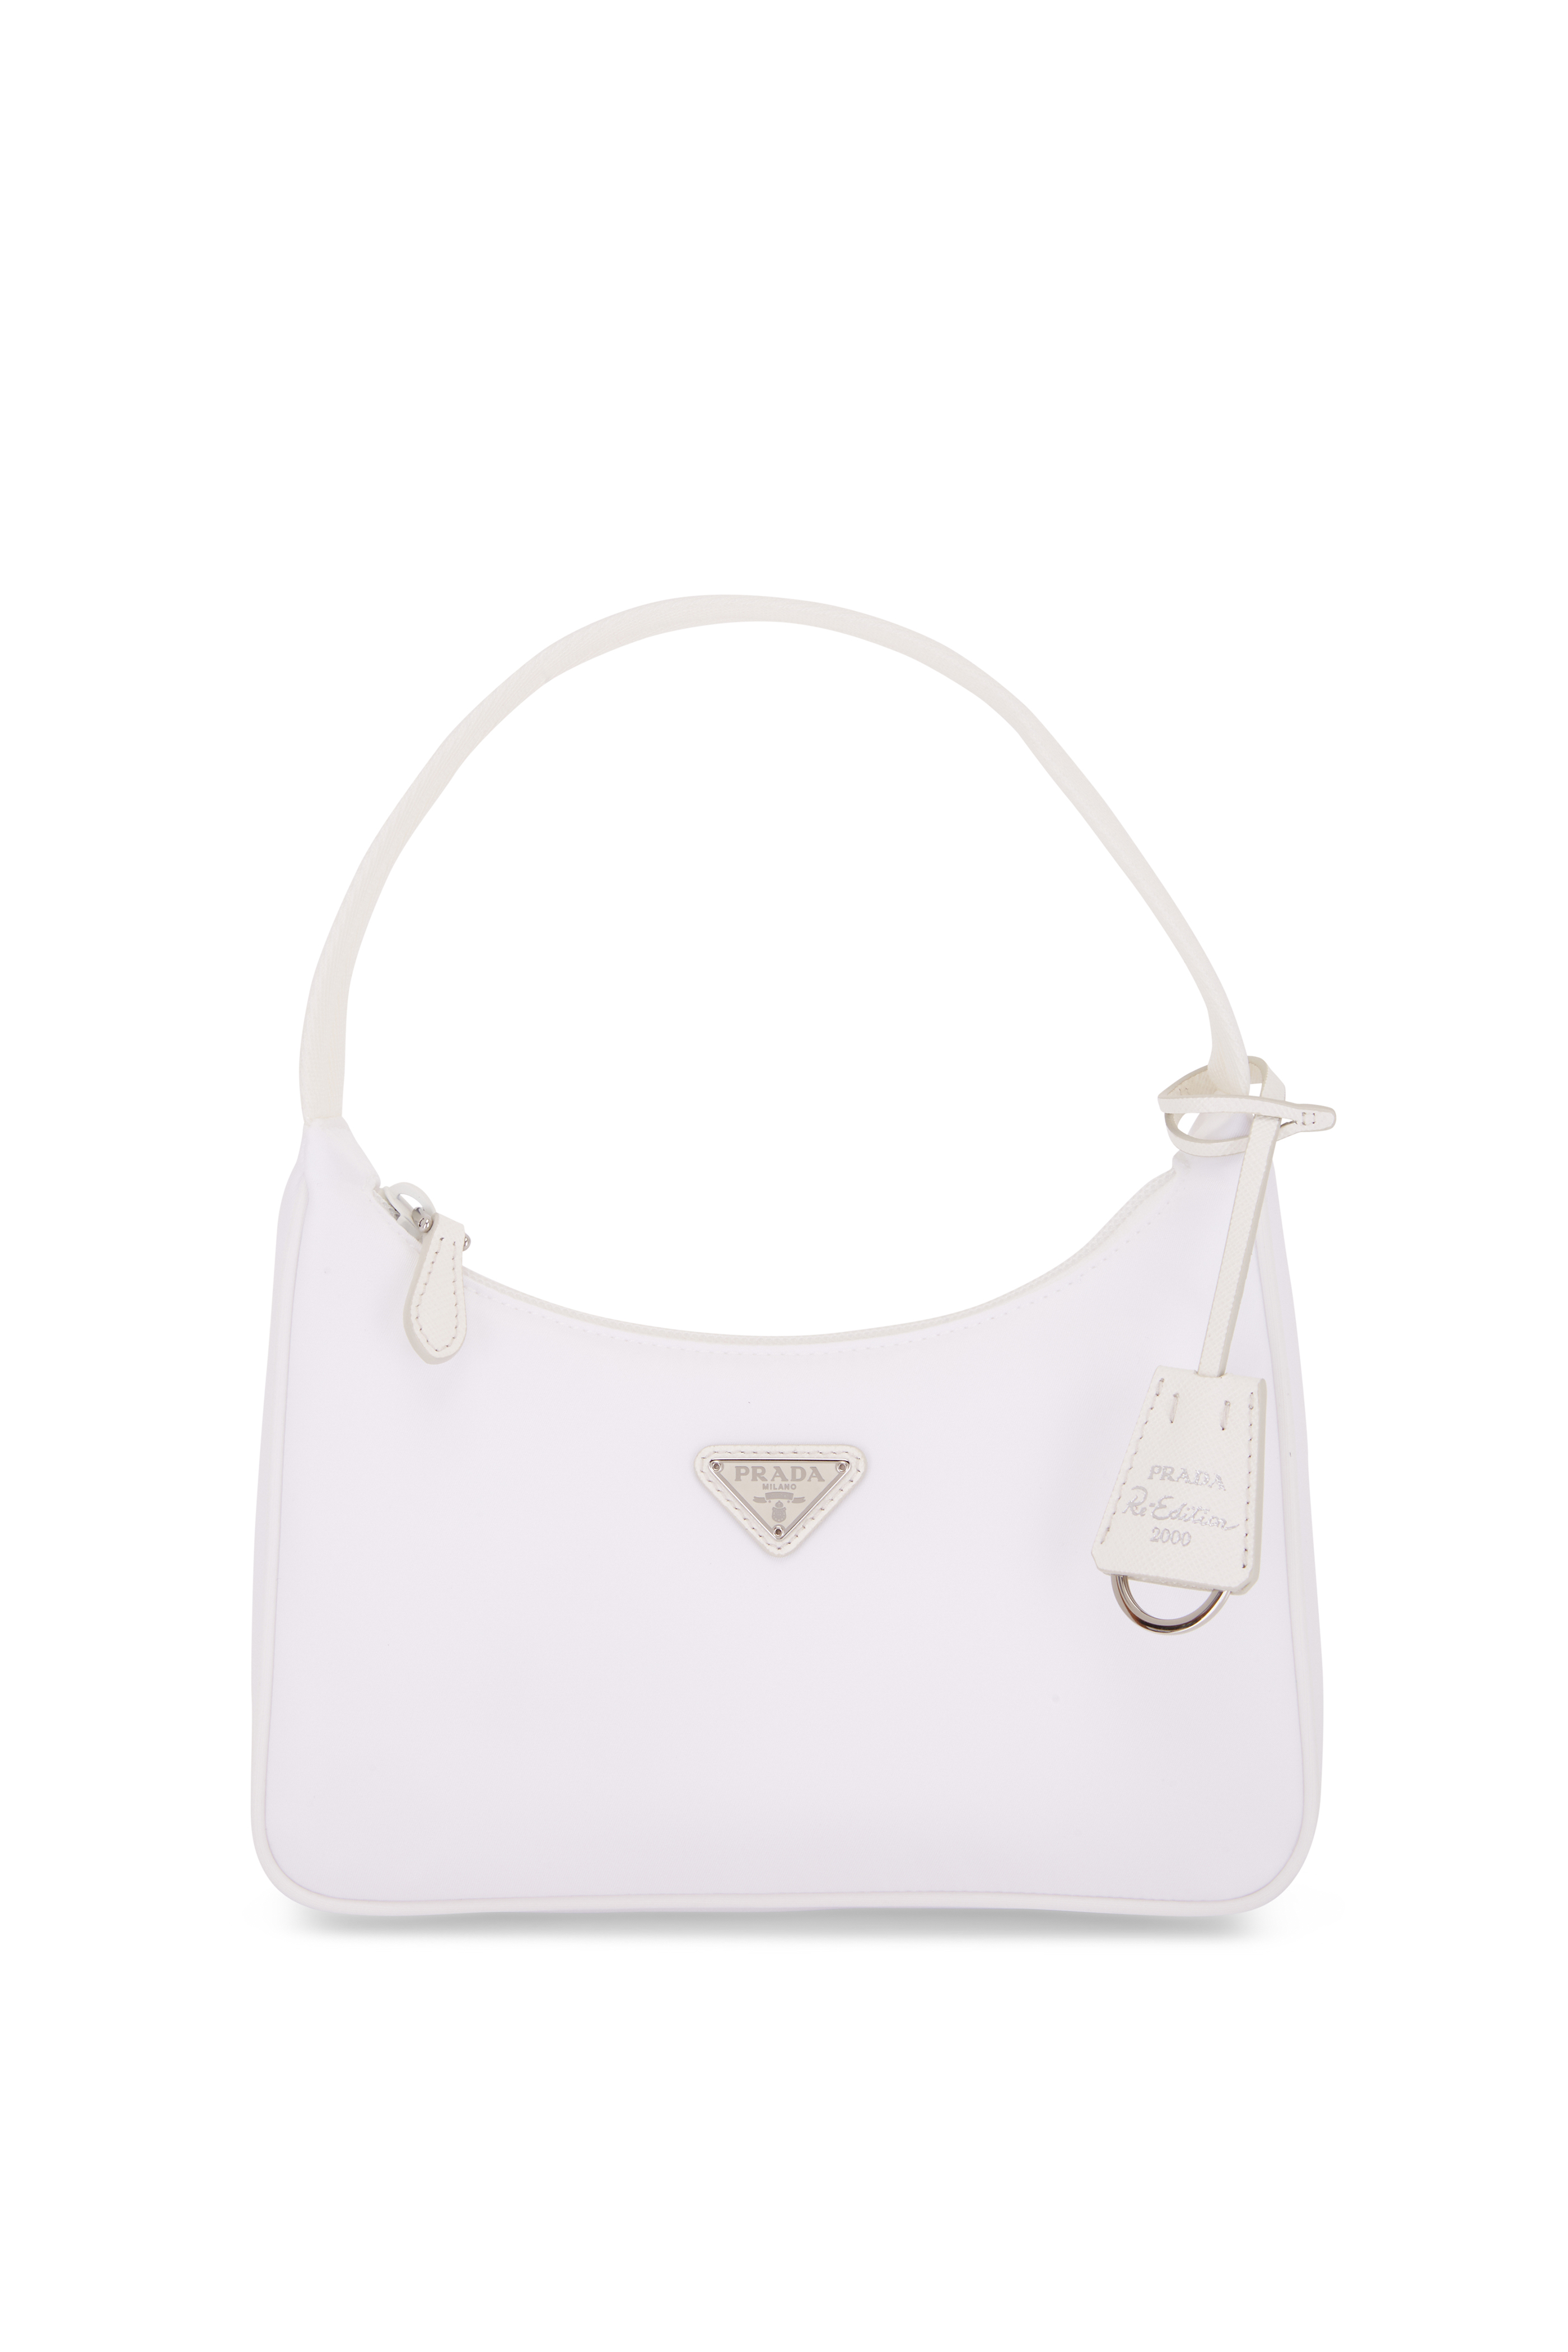 PRADA Spazzolato Micro Galleria Shoulder Bag White 1229841